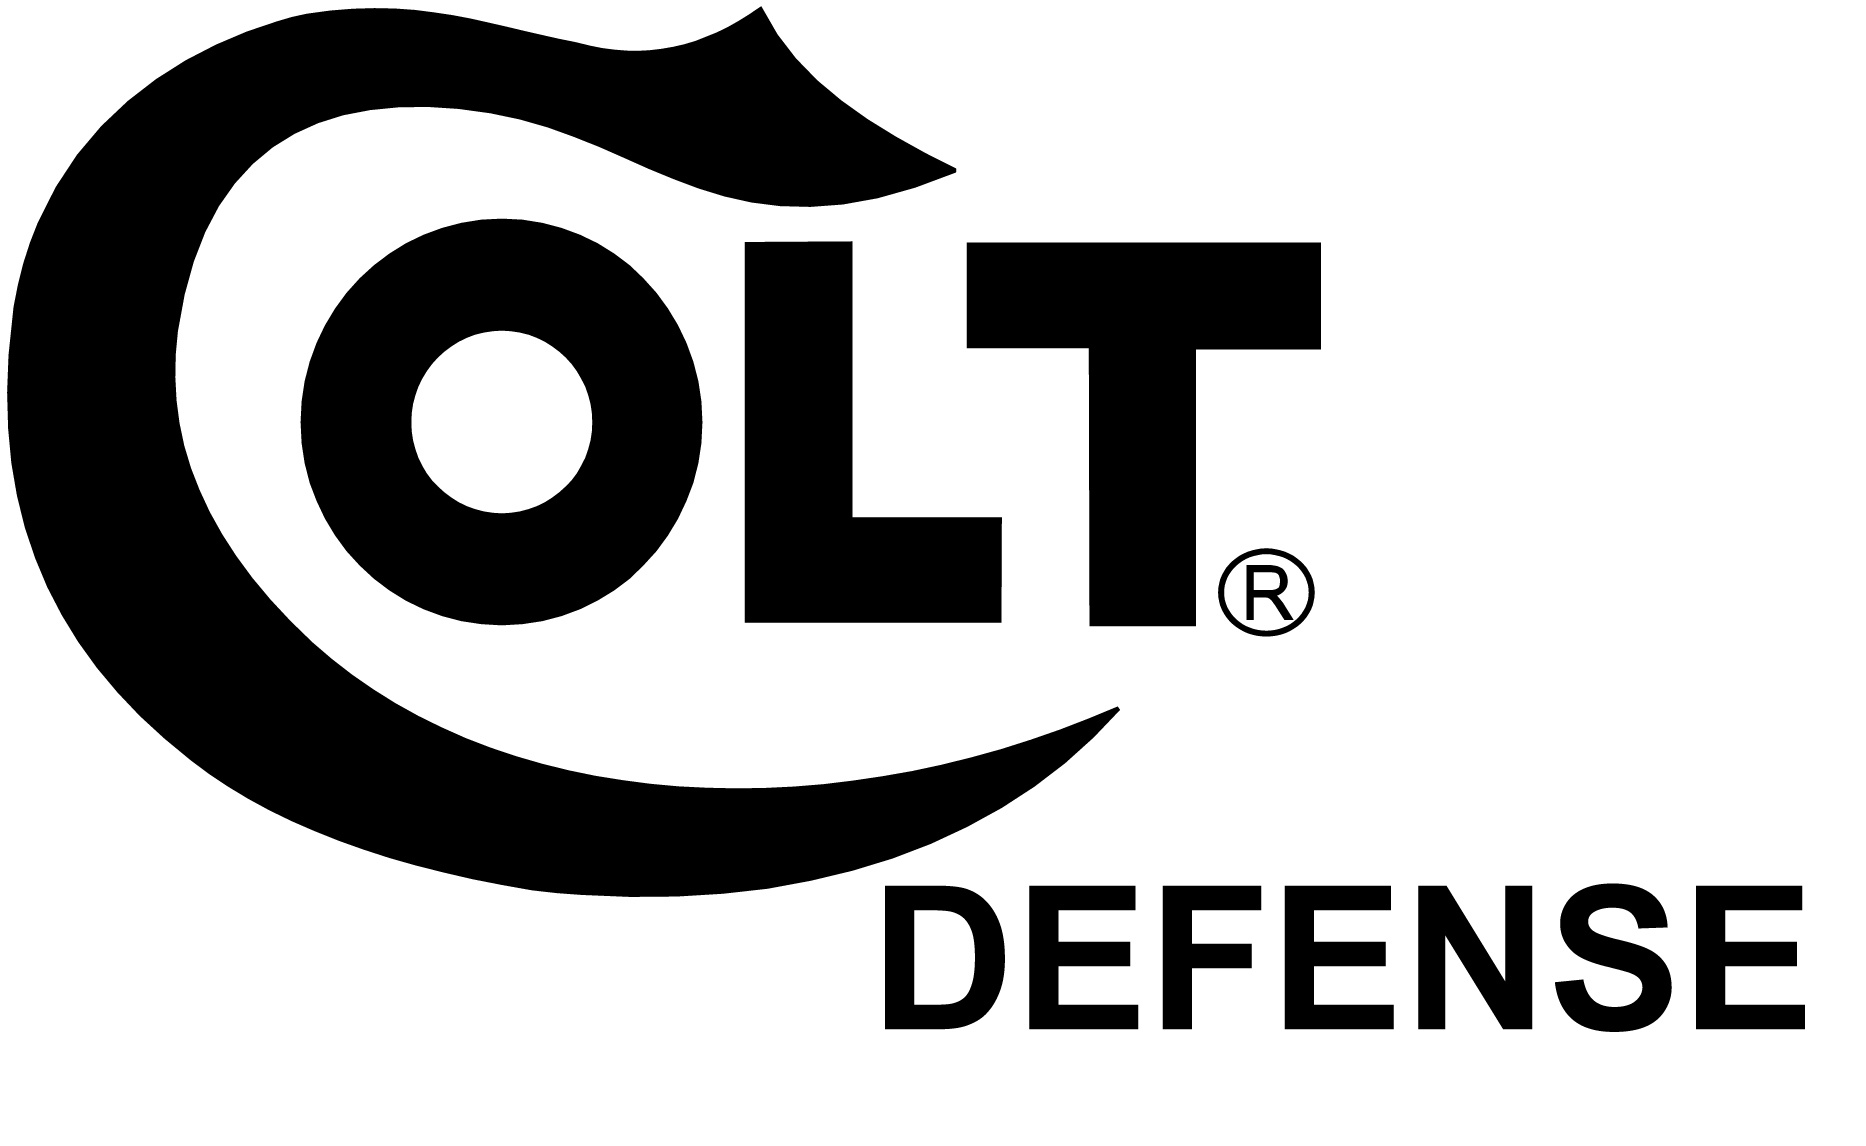 Colt M16A1 Logo